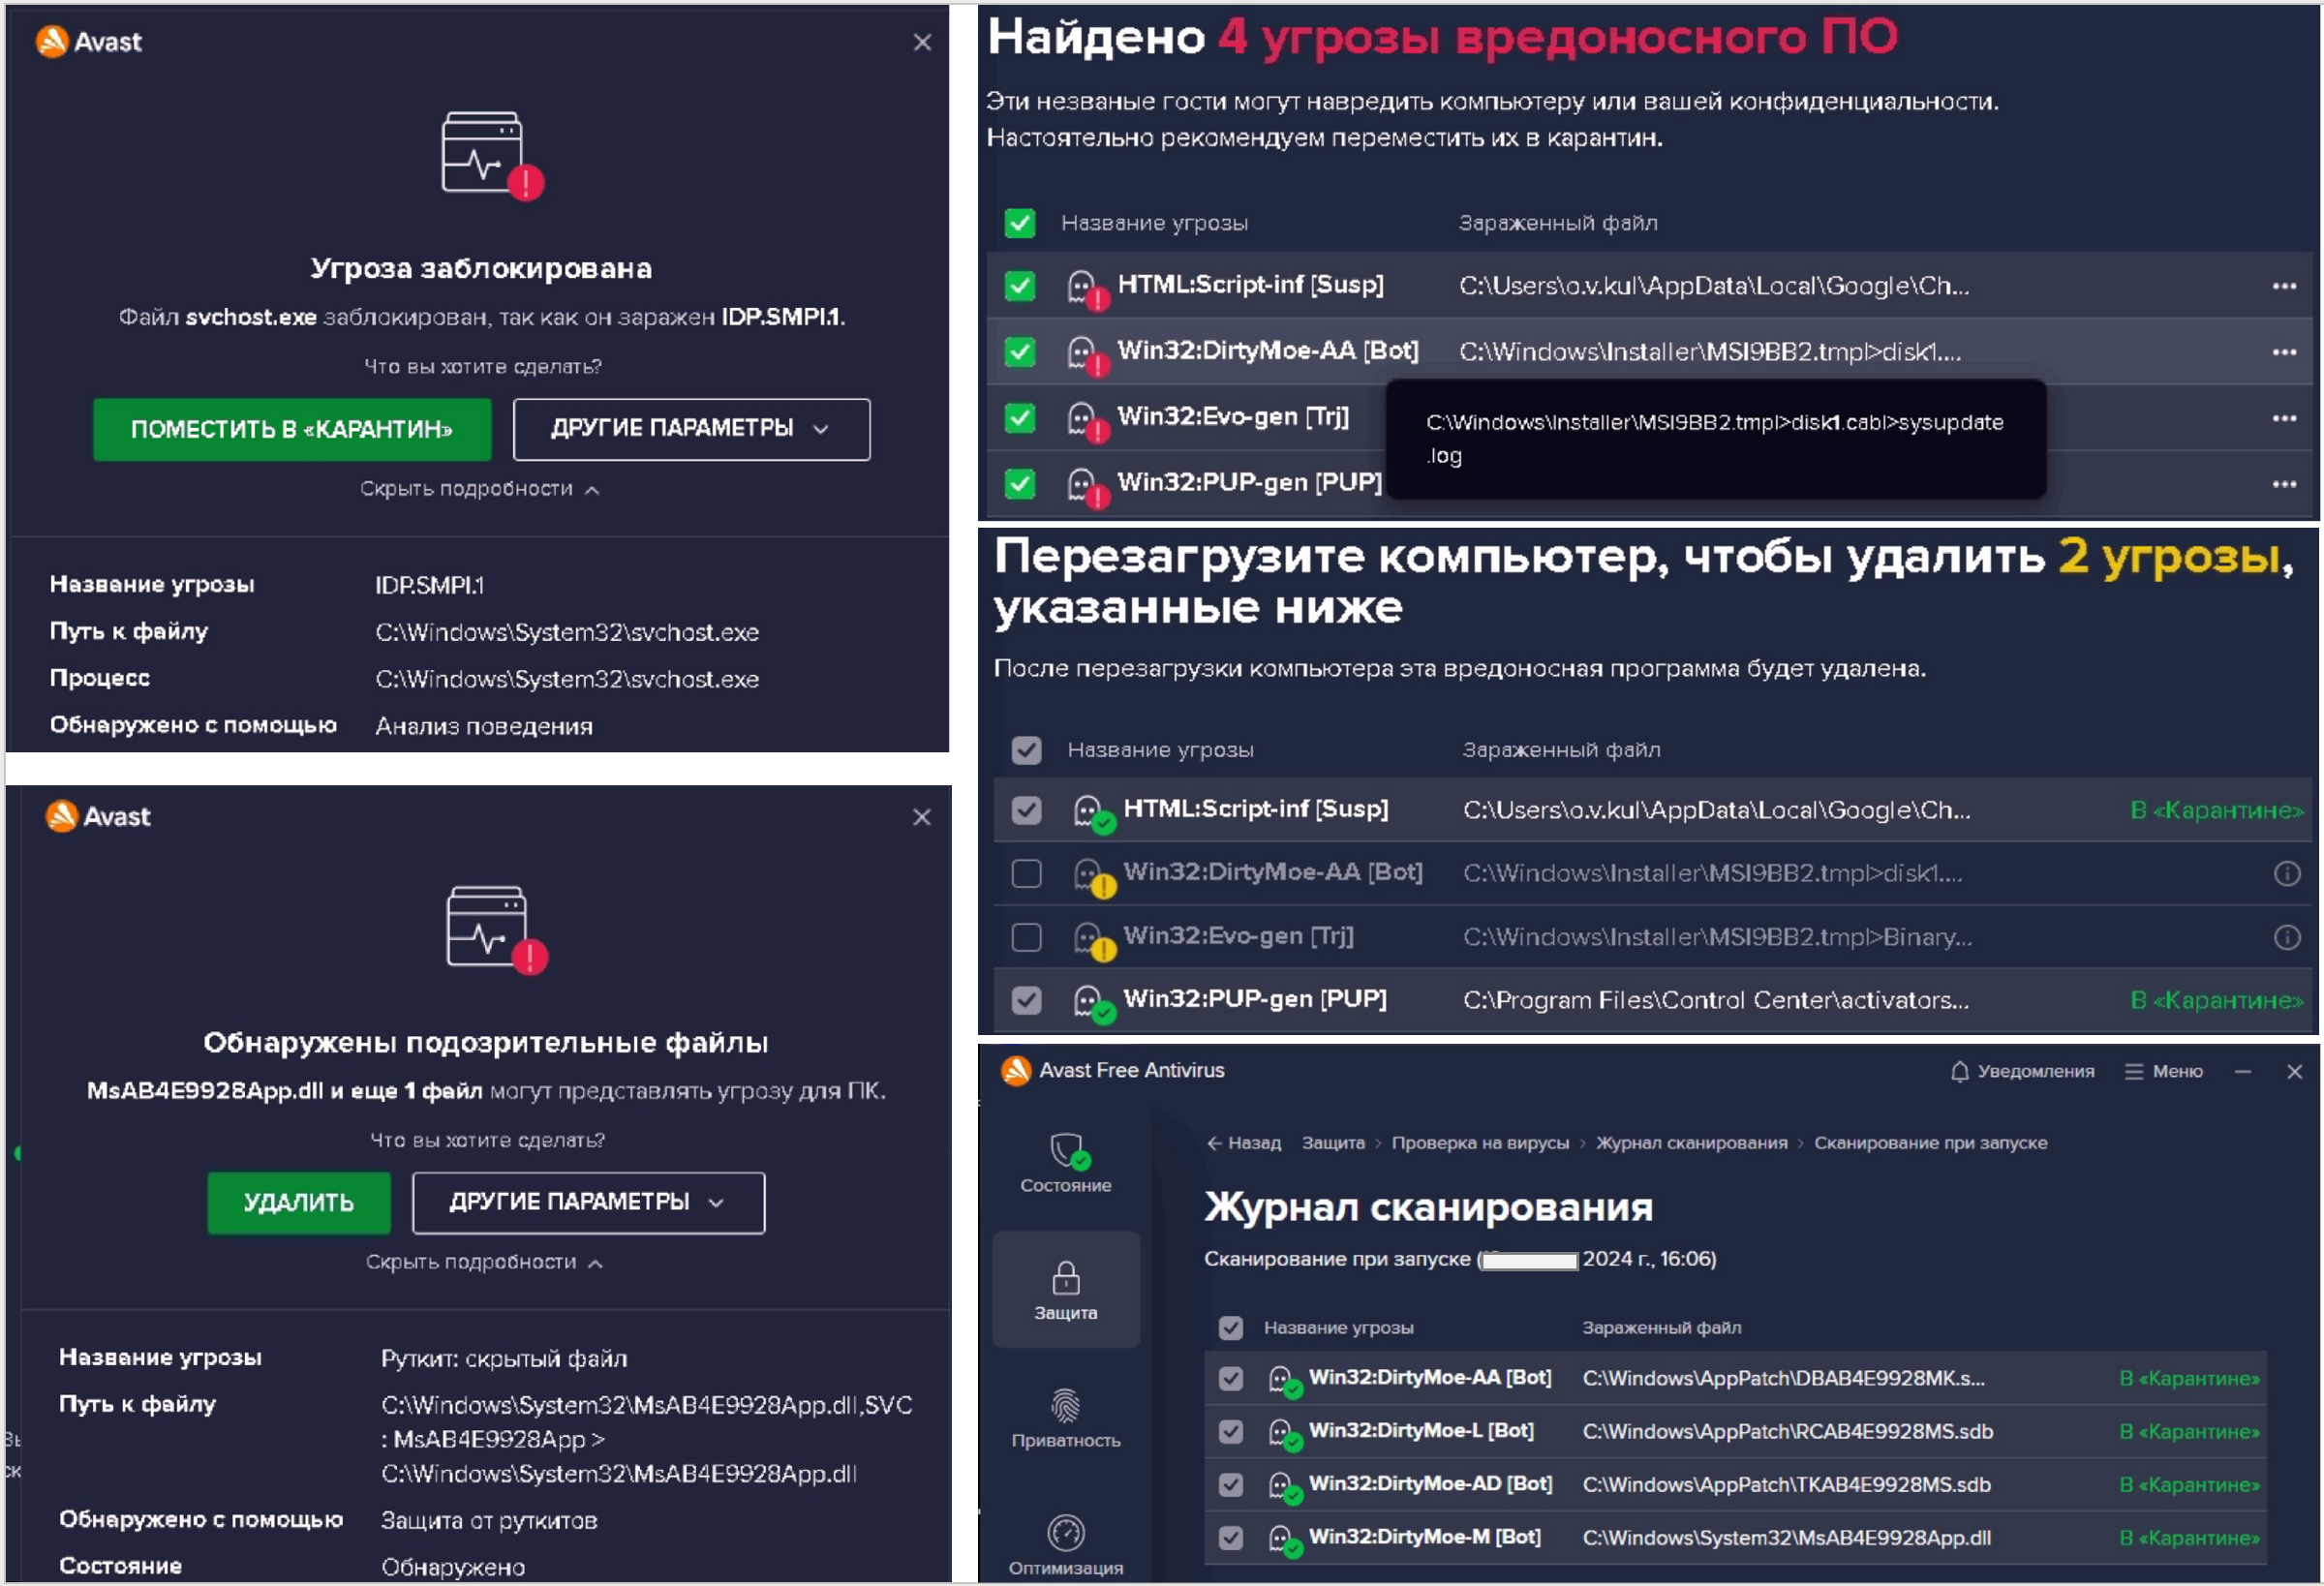 PurpleFox malware infected at least 2,000 computers in Ukraine